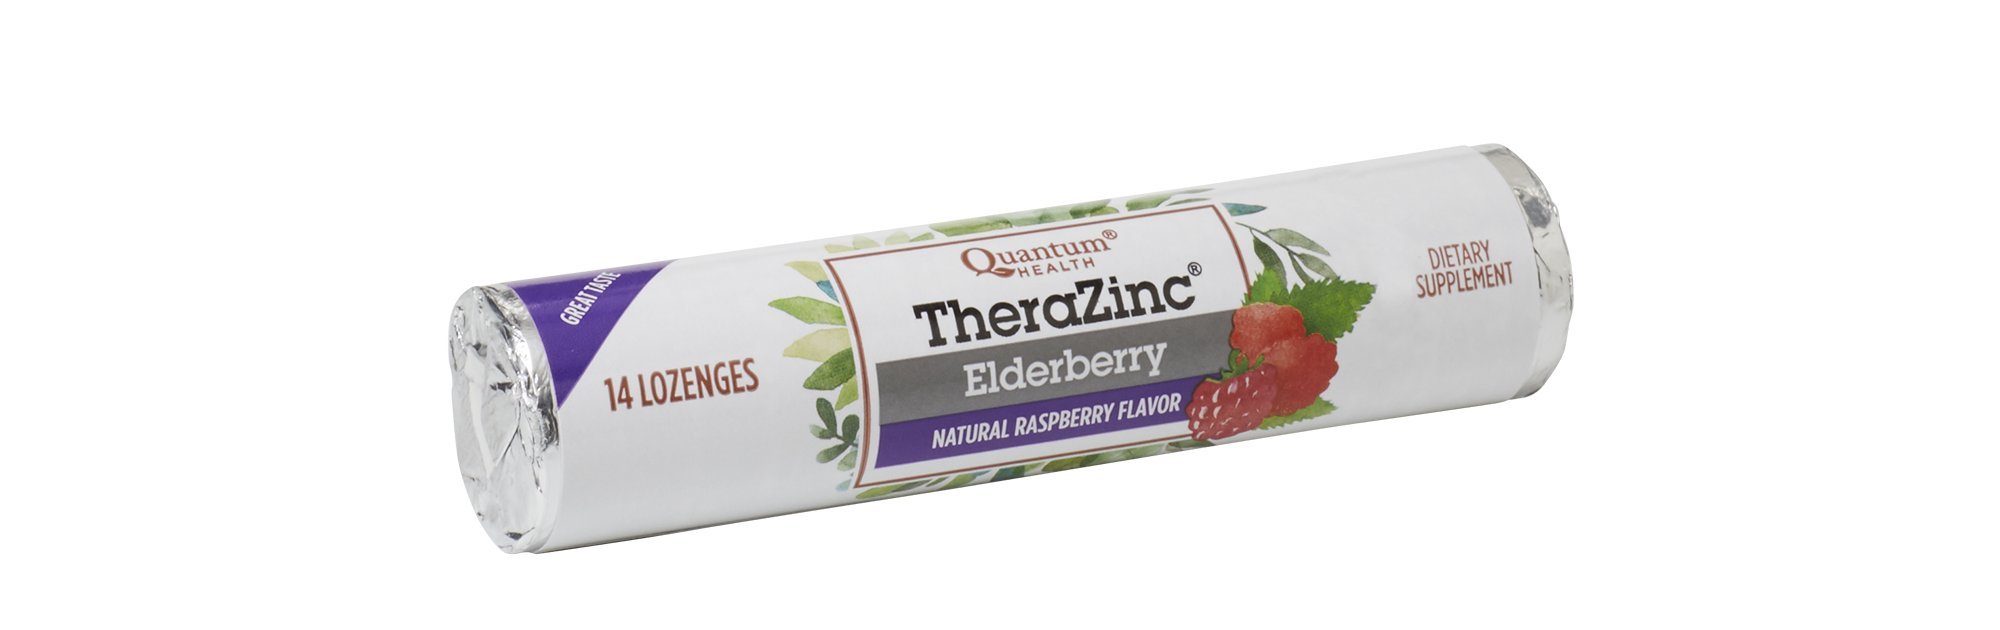 Quantum Health TheraZinc Zinc Lozenges|Elderberry Raspberry|Immune Support Formulated with Zinc Gluconate|Fast Relief|No Aftertaste|14 Count